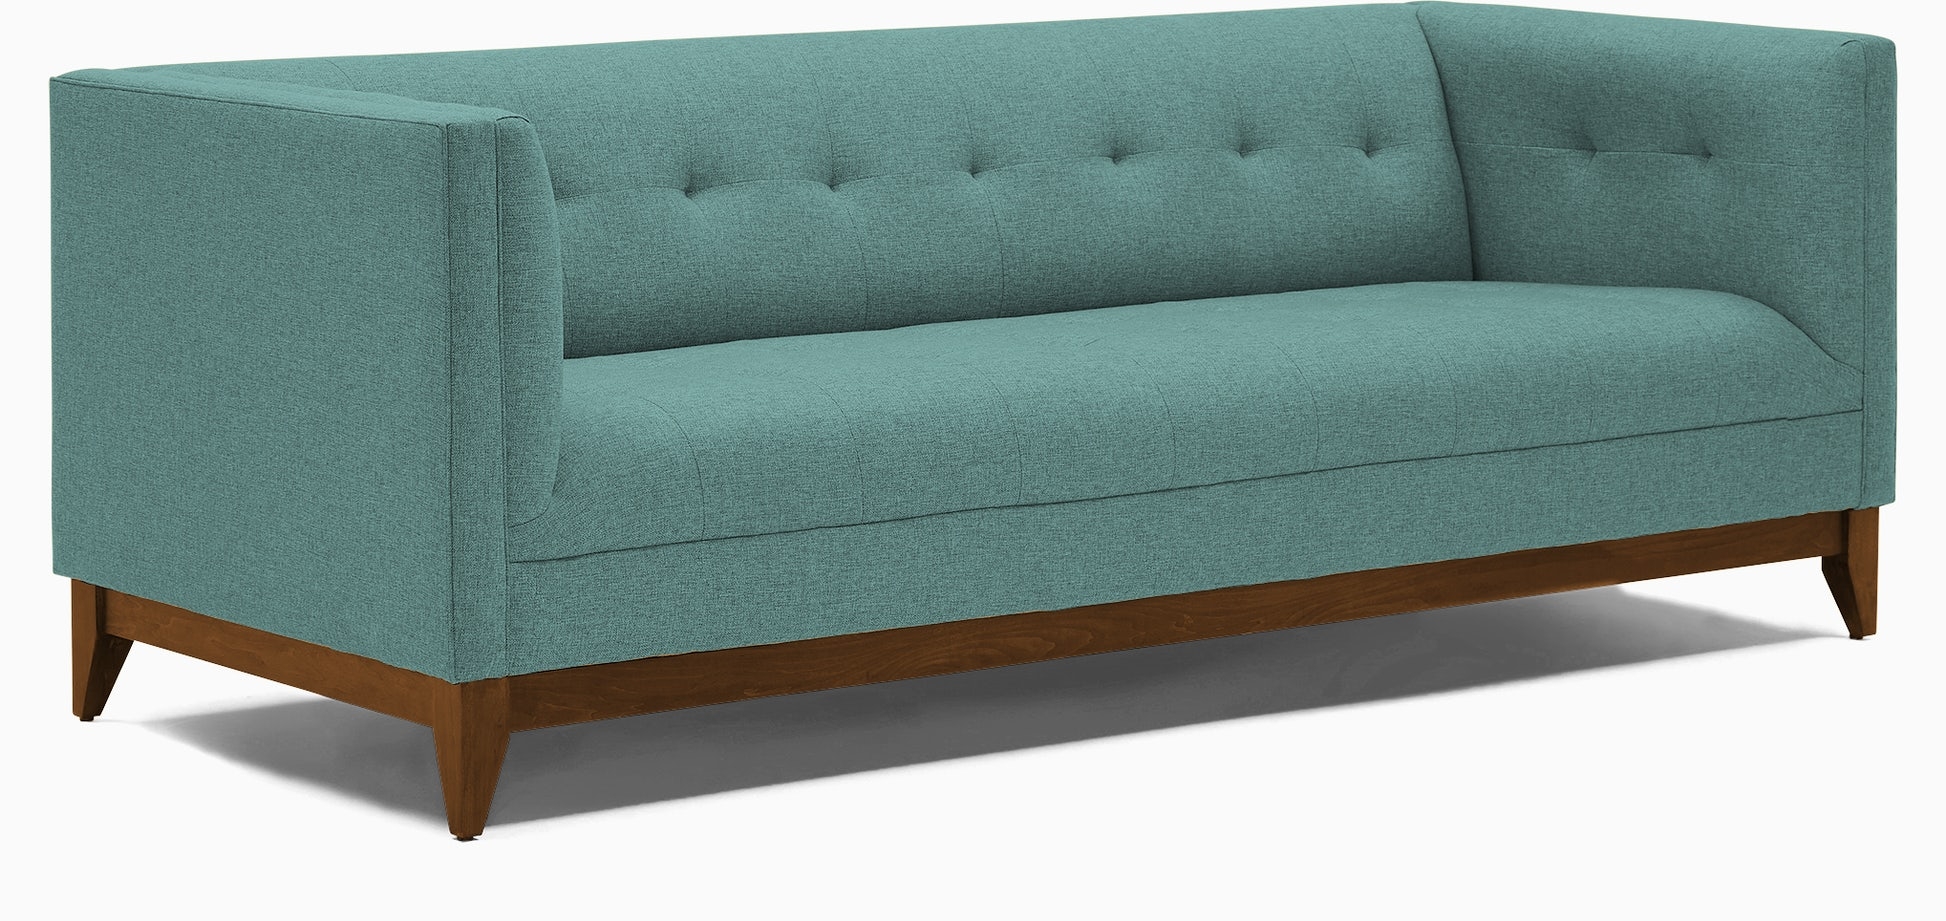 Stowe Sofa - Image 1